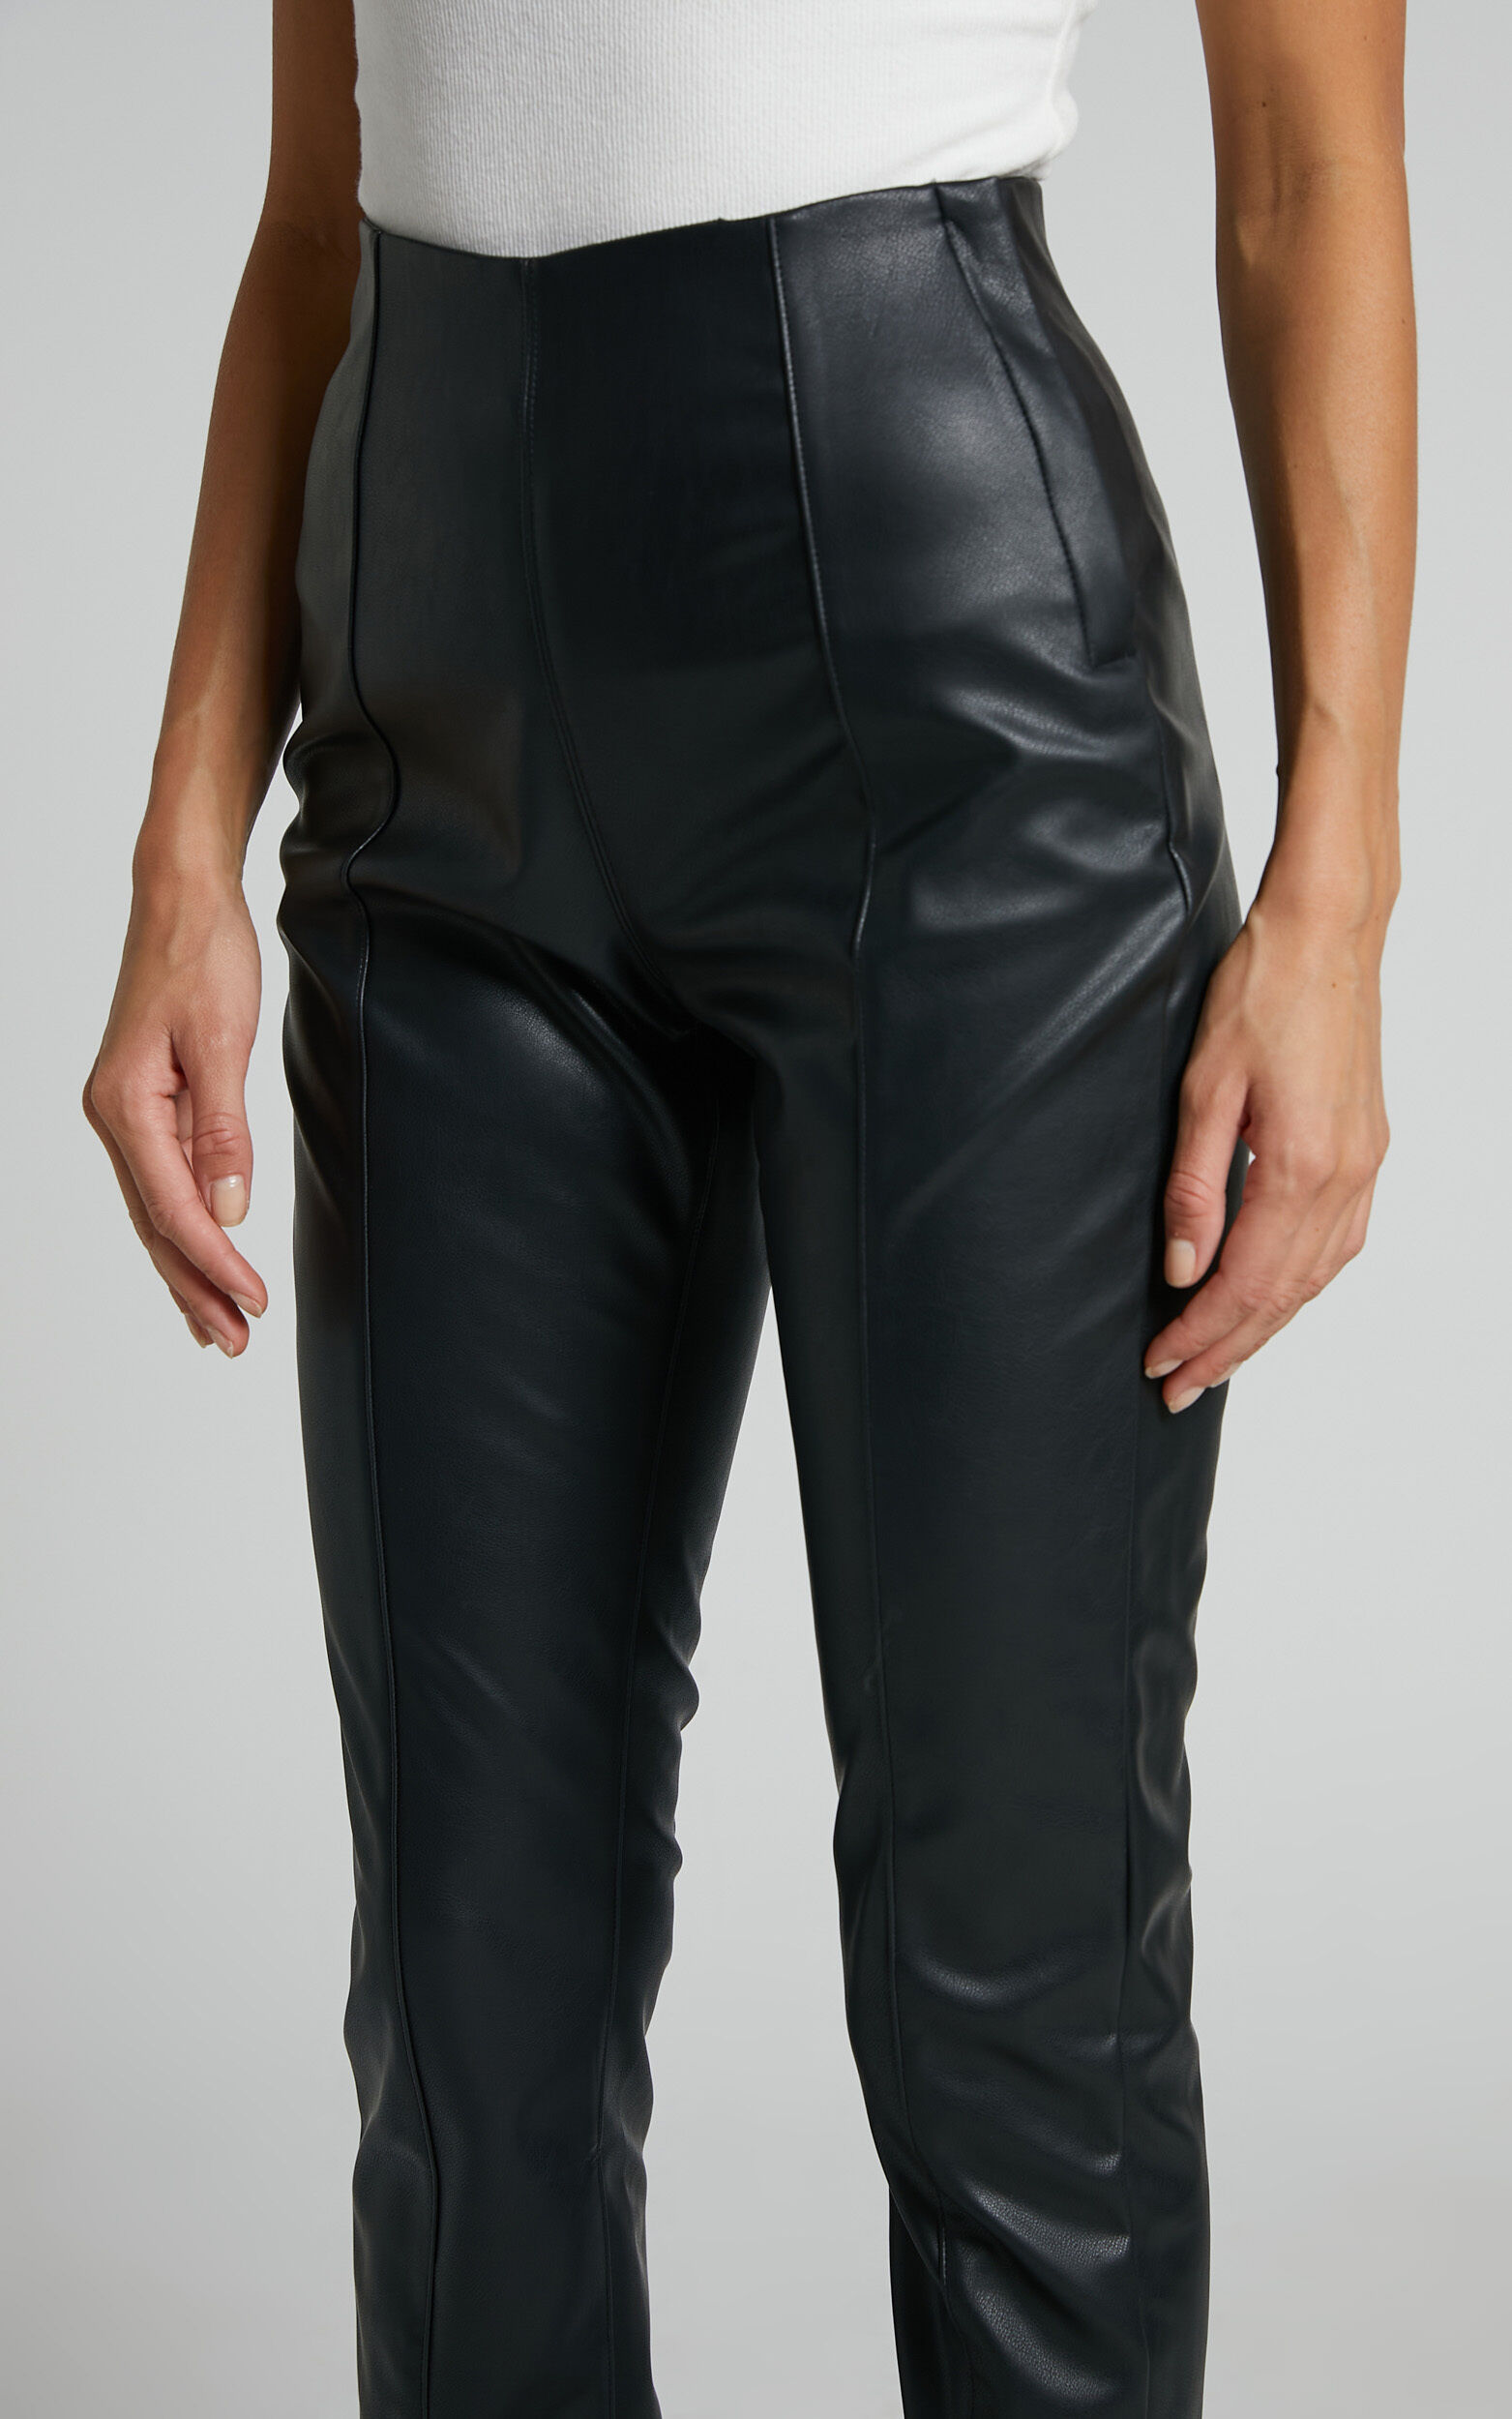 Leather-effect leggings with split hems - Women